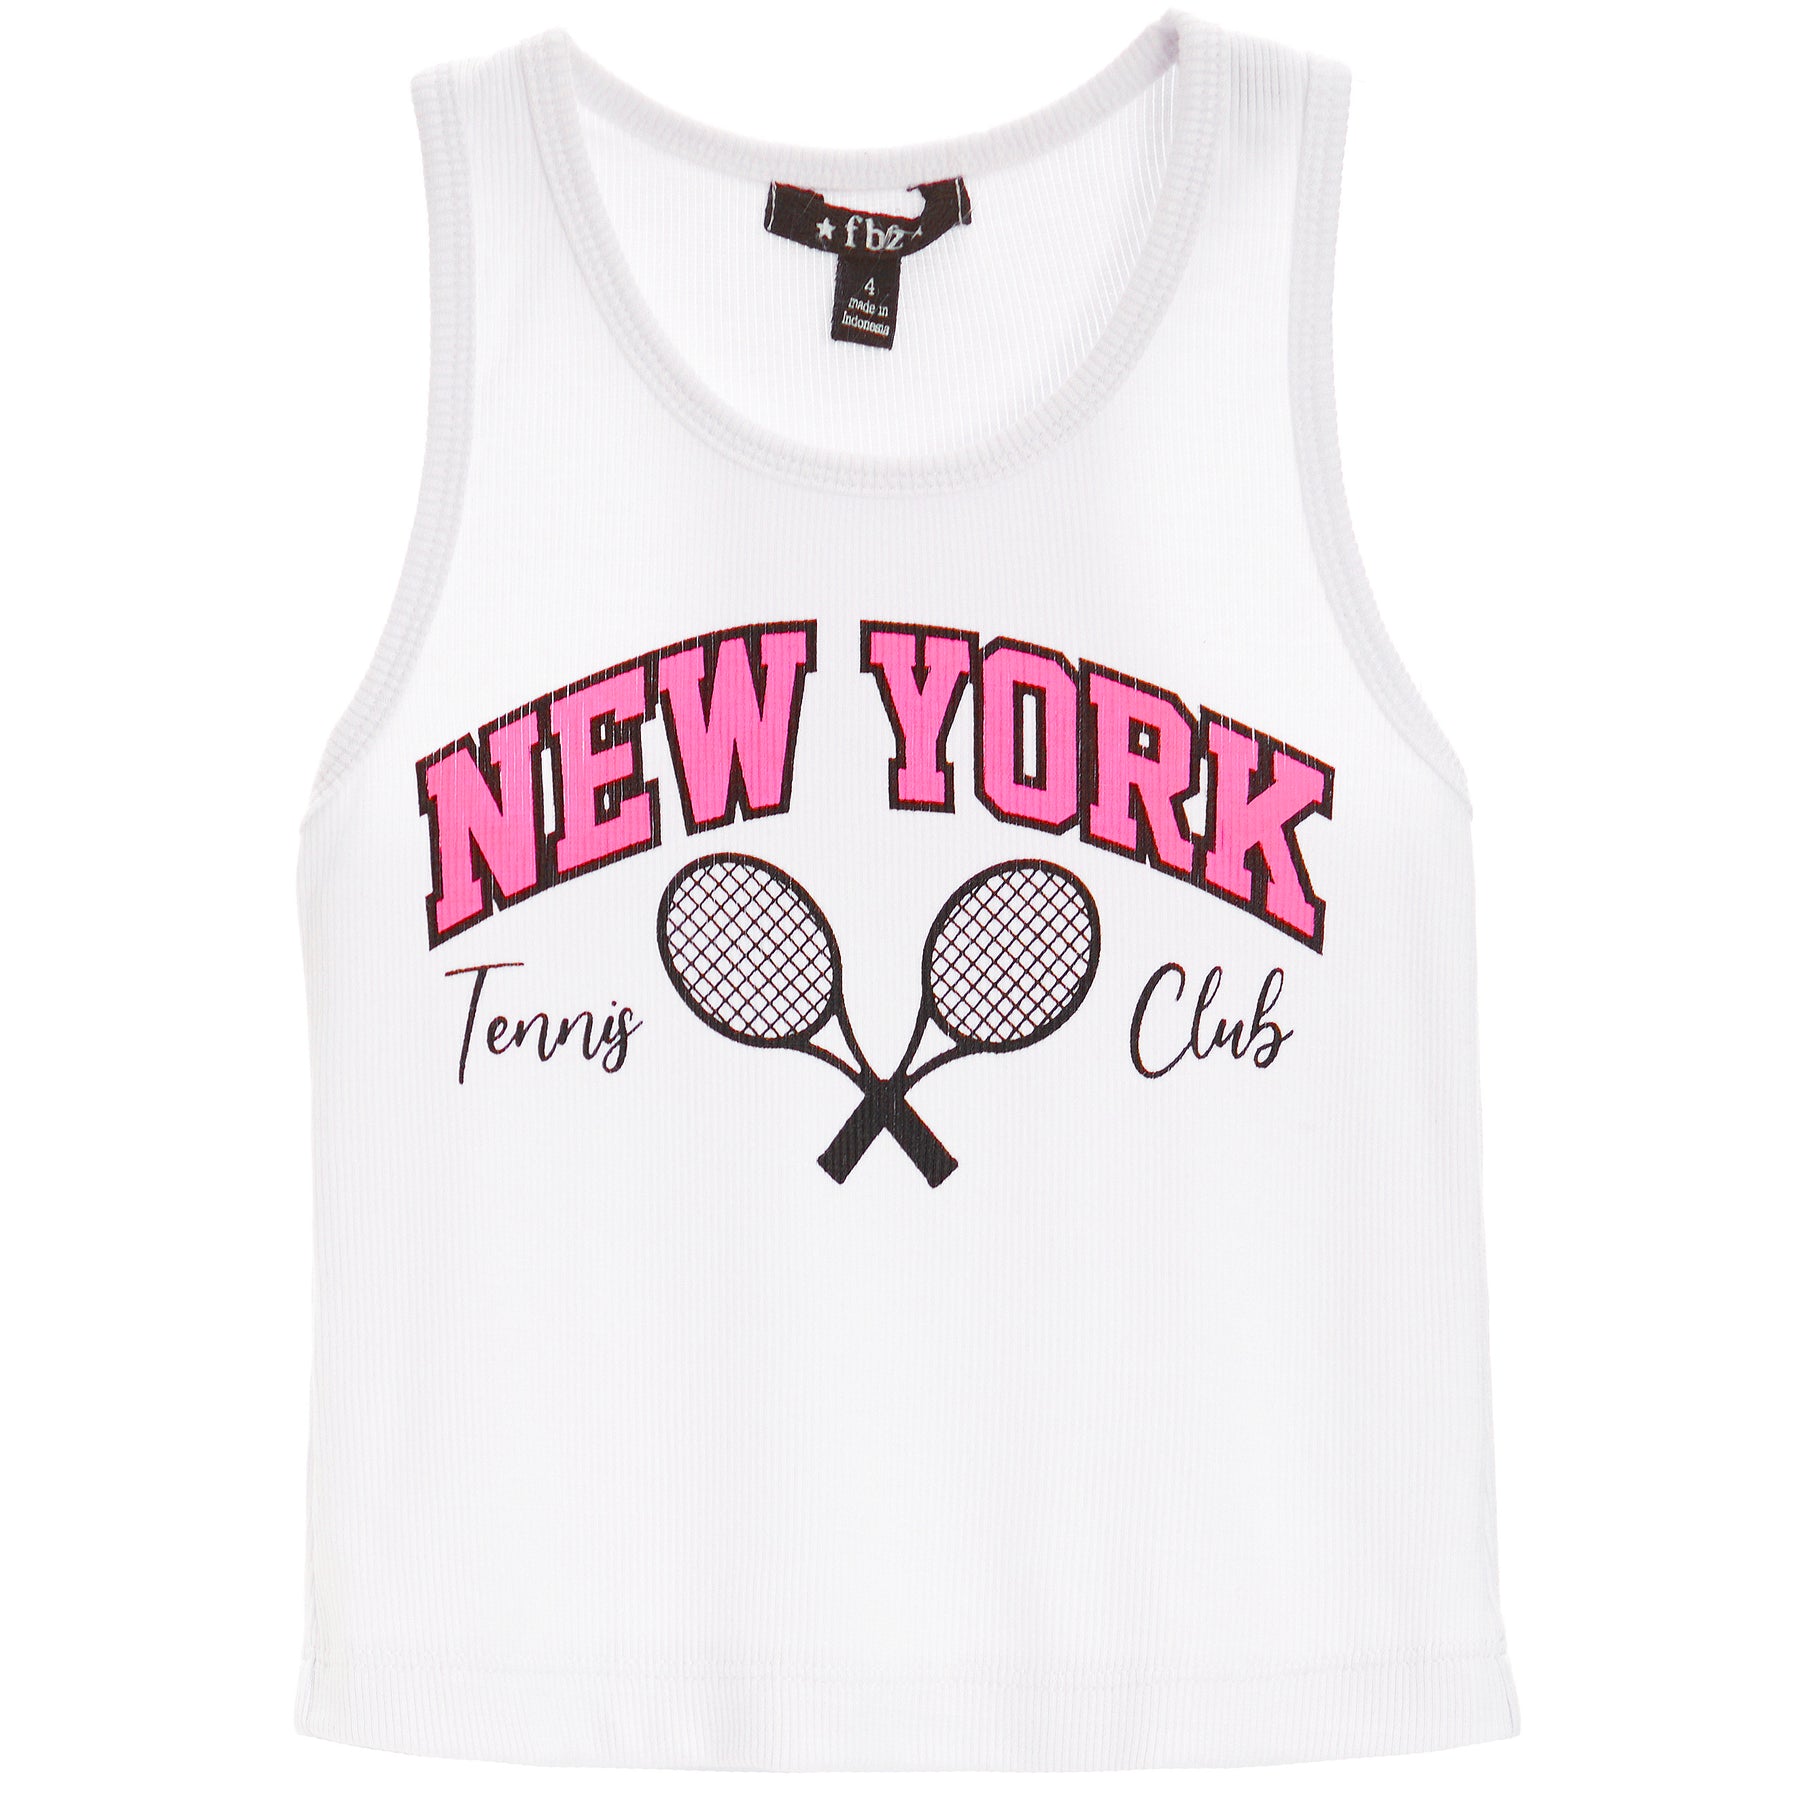 New York Tennis Club Tank